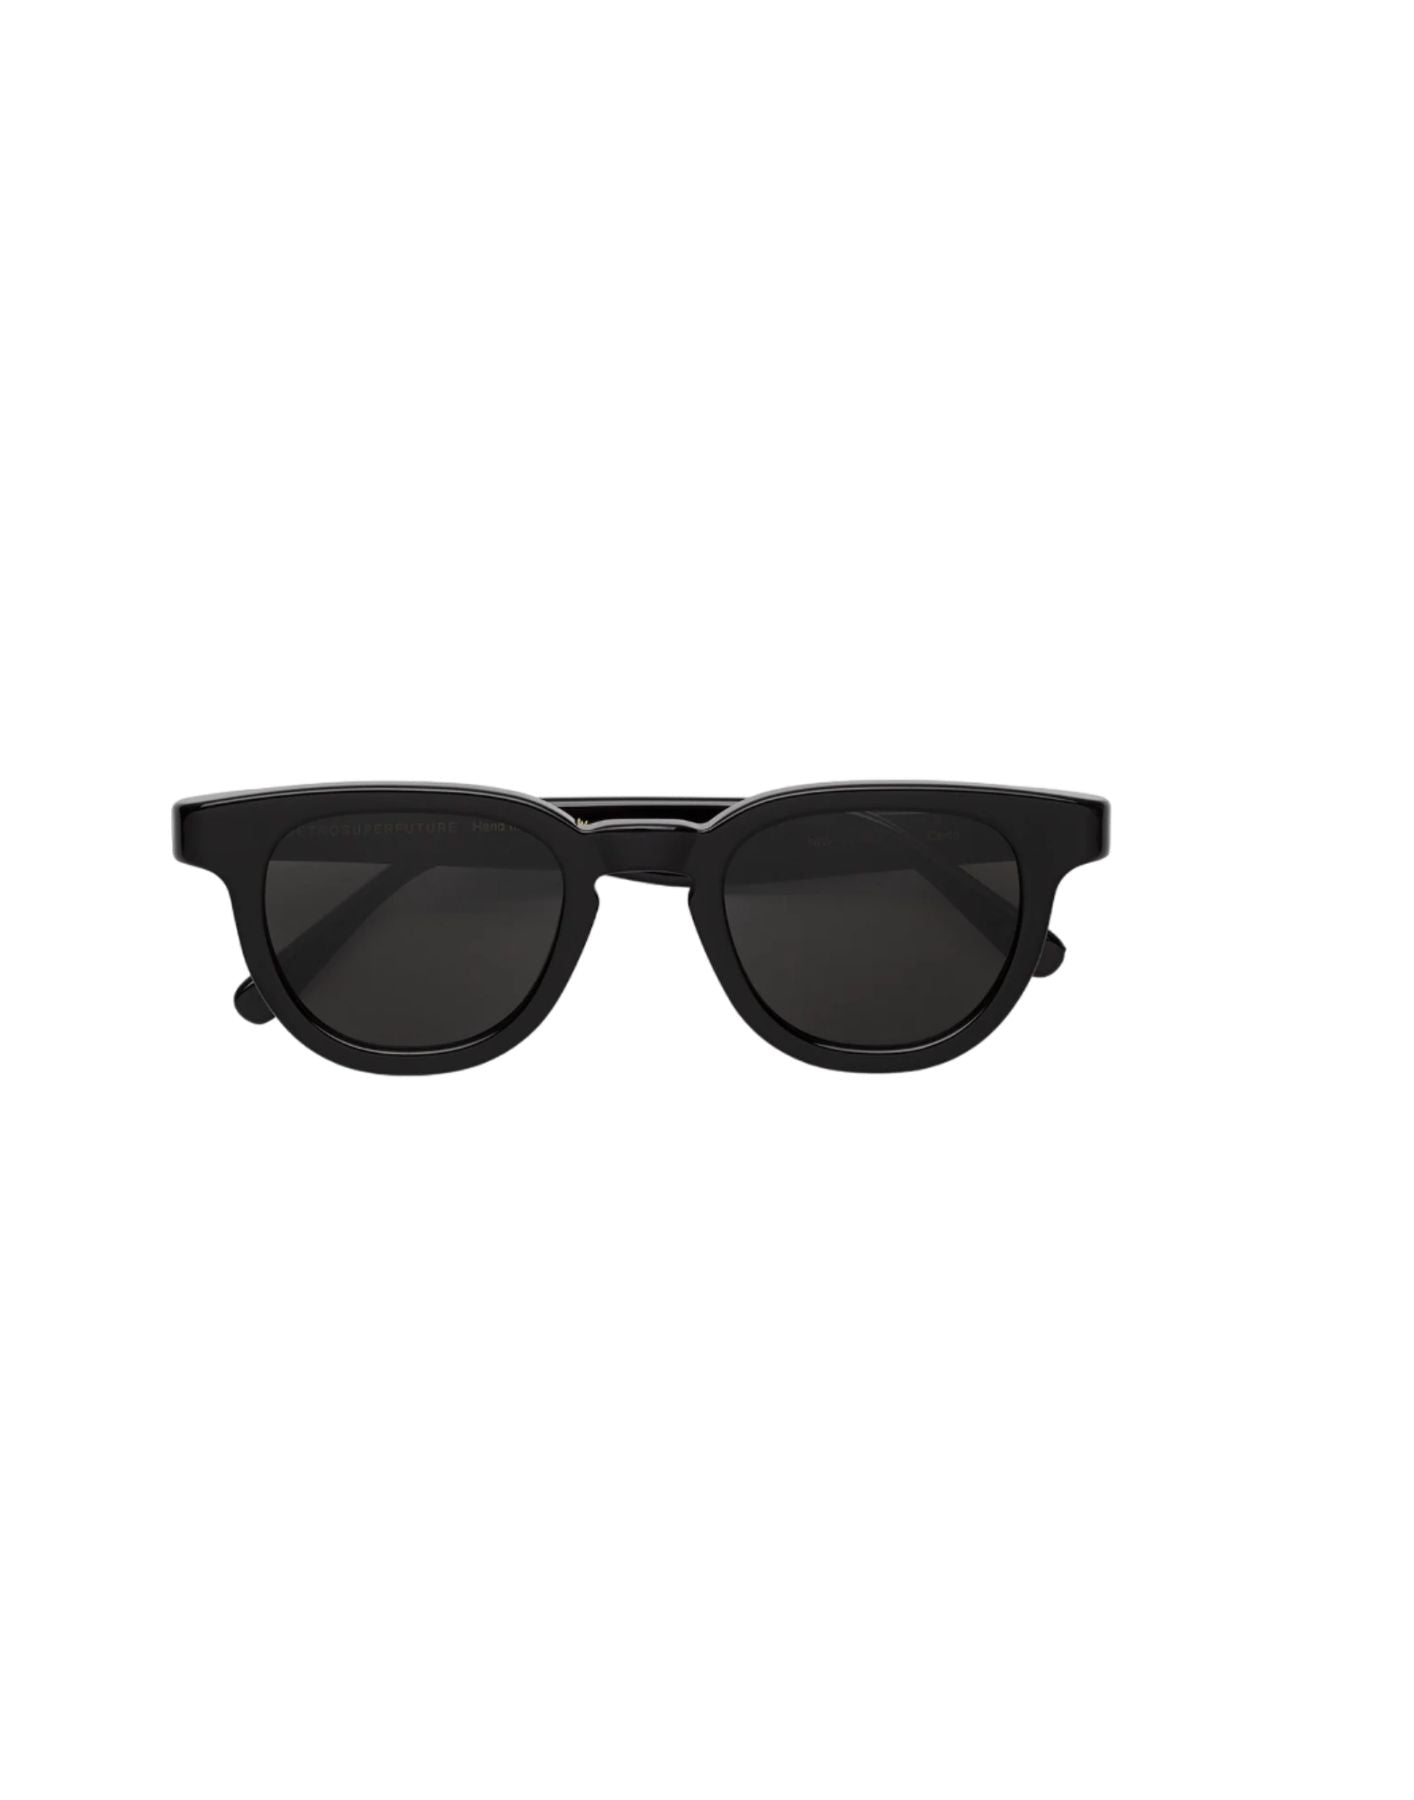 Sonnenbrille Unisex Certo Black NIW RetroSuperFuture